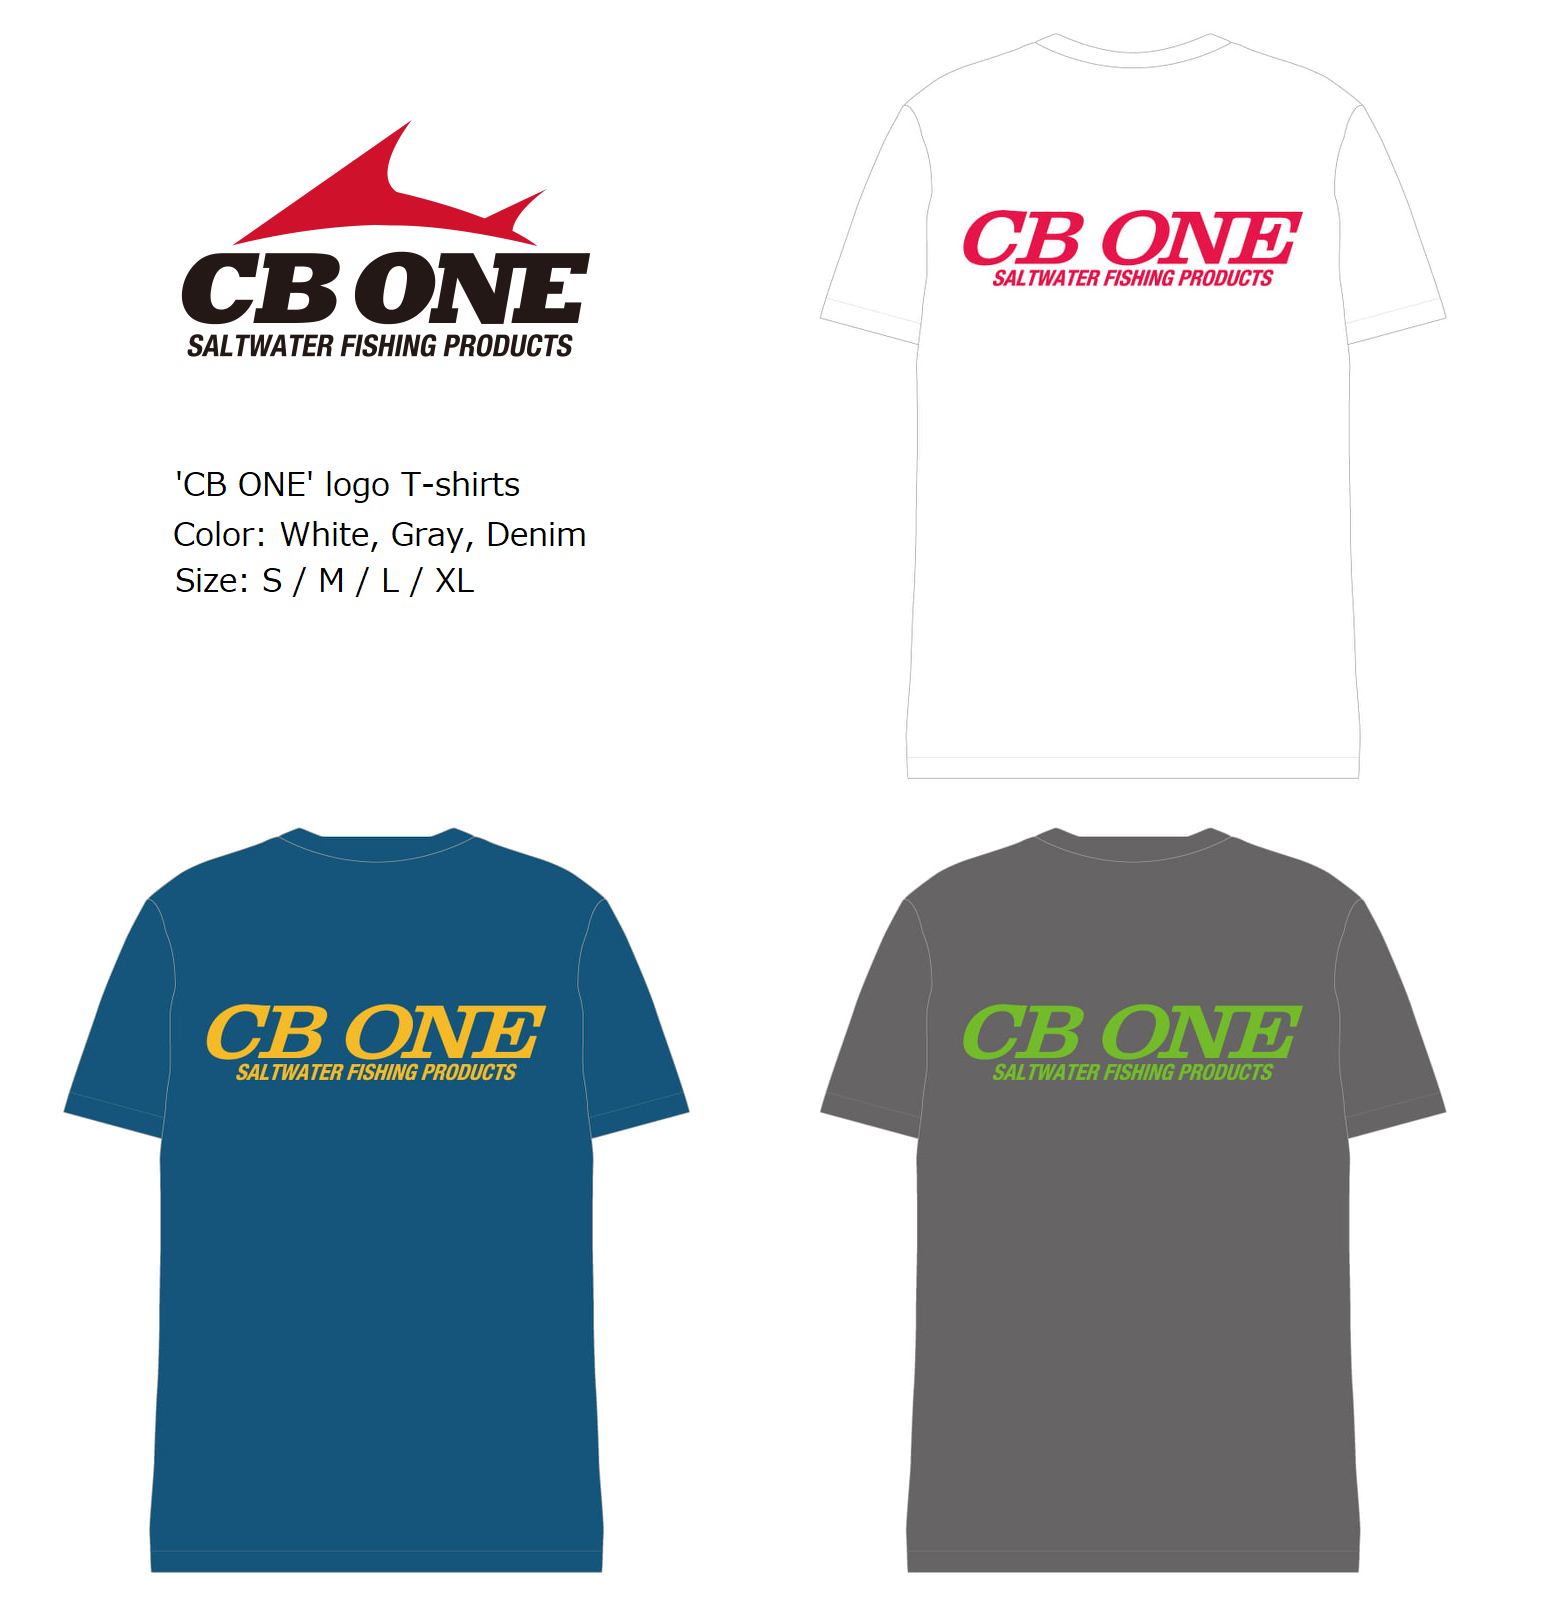 CB ONE logo T-shirts